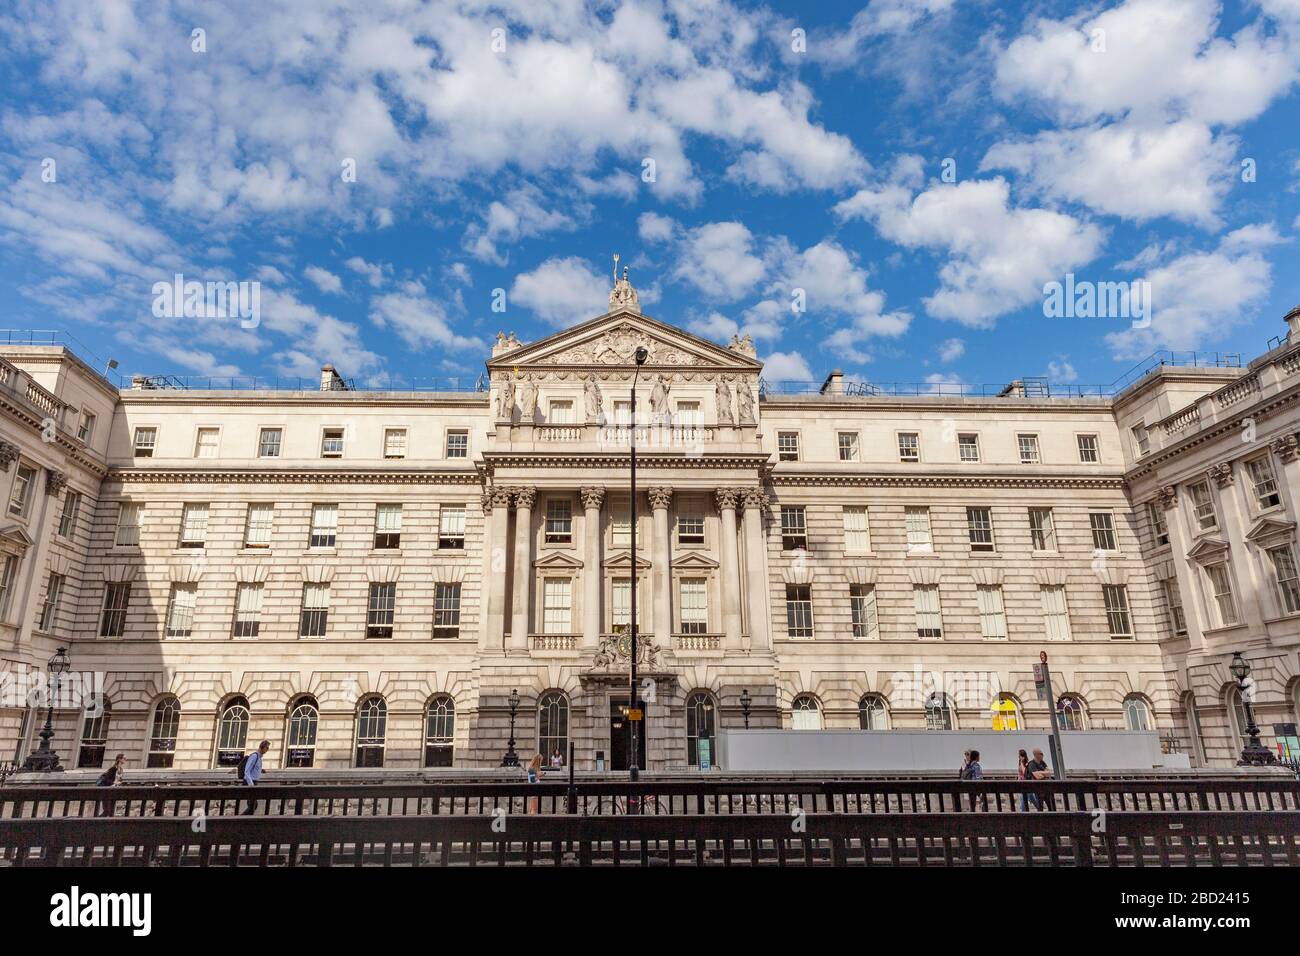 Somerset House, London Stock Photo - Alamy